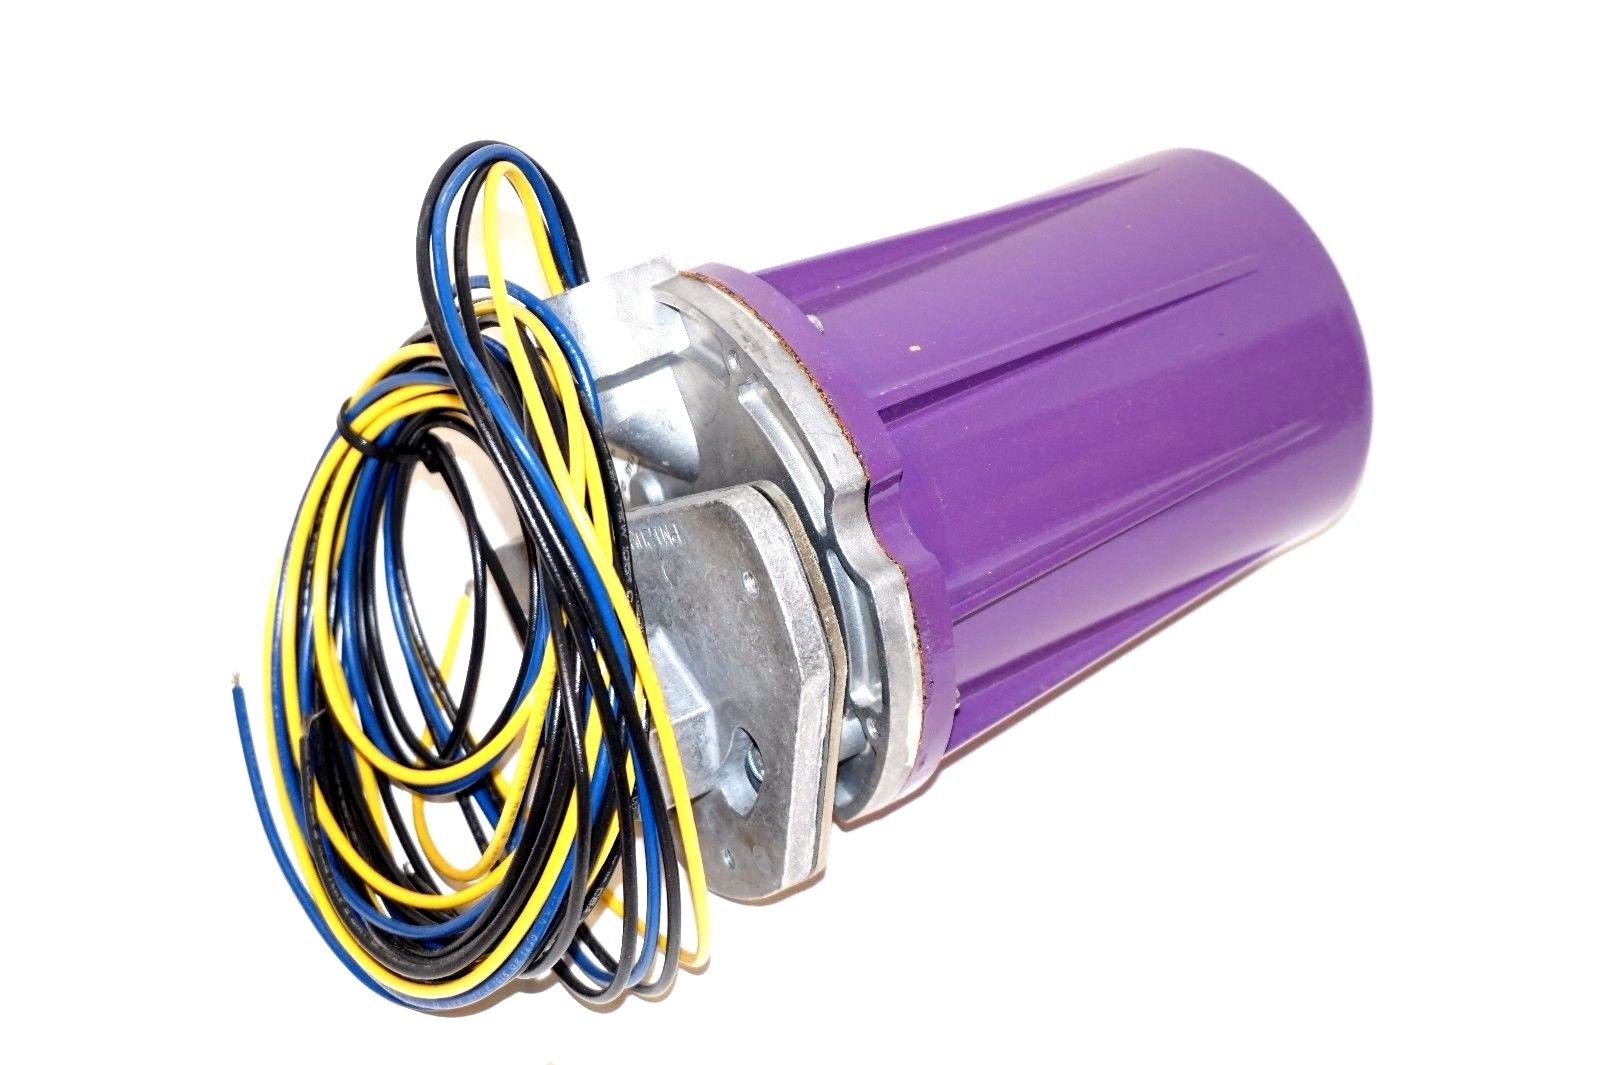 HONEYWELL C7012A1145 Flame Sensor, Ultraviolet, Purple Peeper